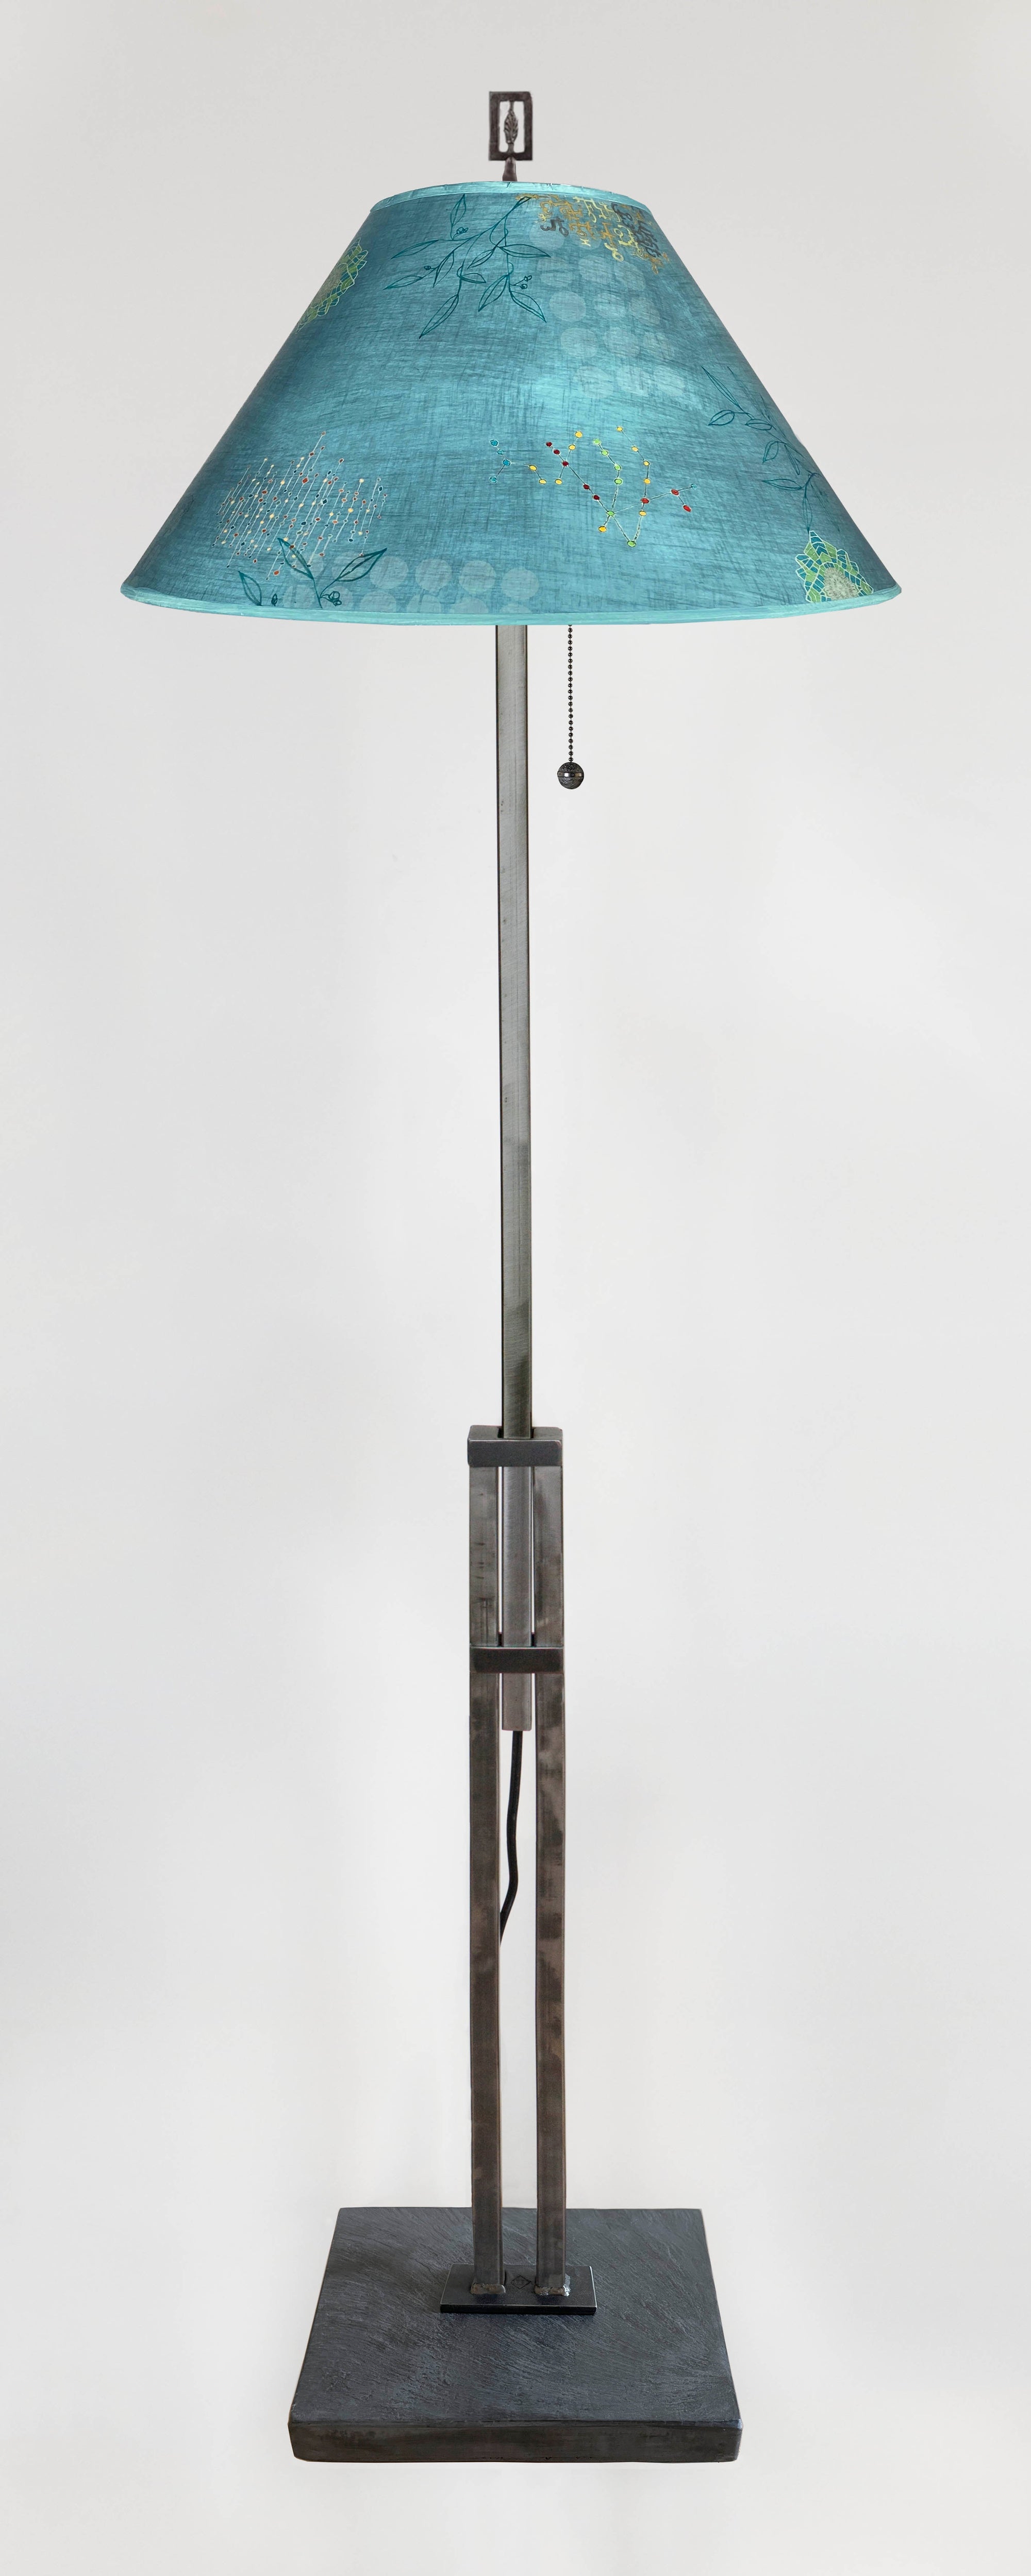 Janna Ugone & Co Floor Lamp Adjustable-Height Steel Floor Lamp with Large Conical Shade in Journeys in Jasper